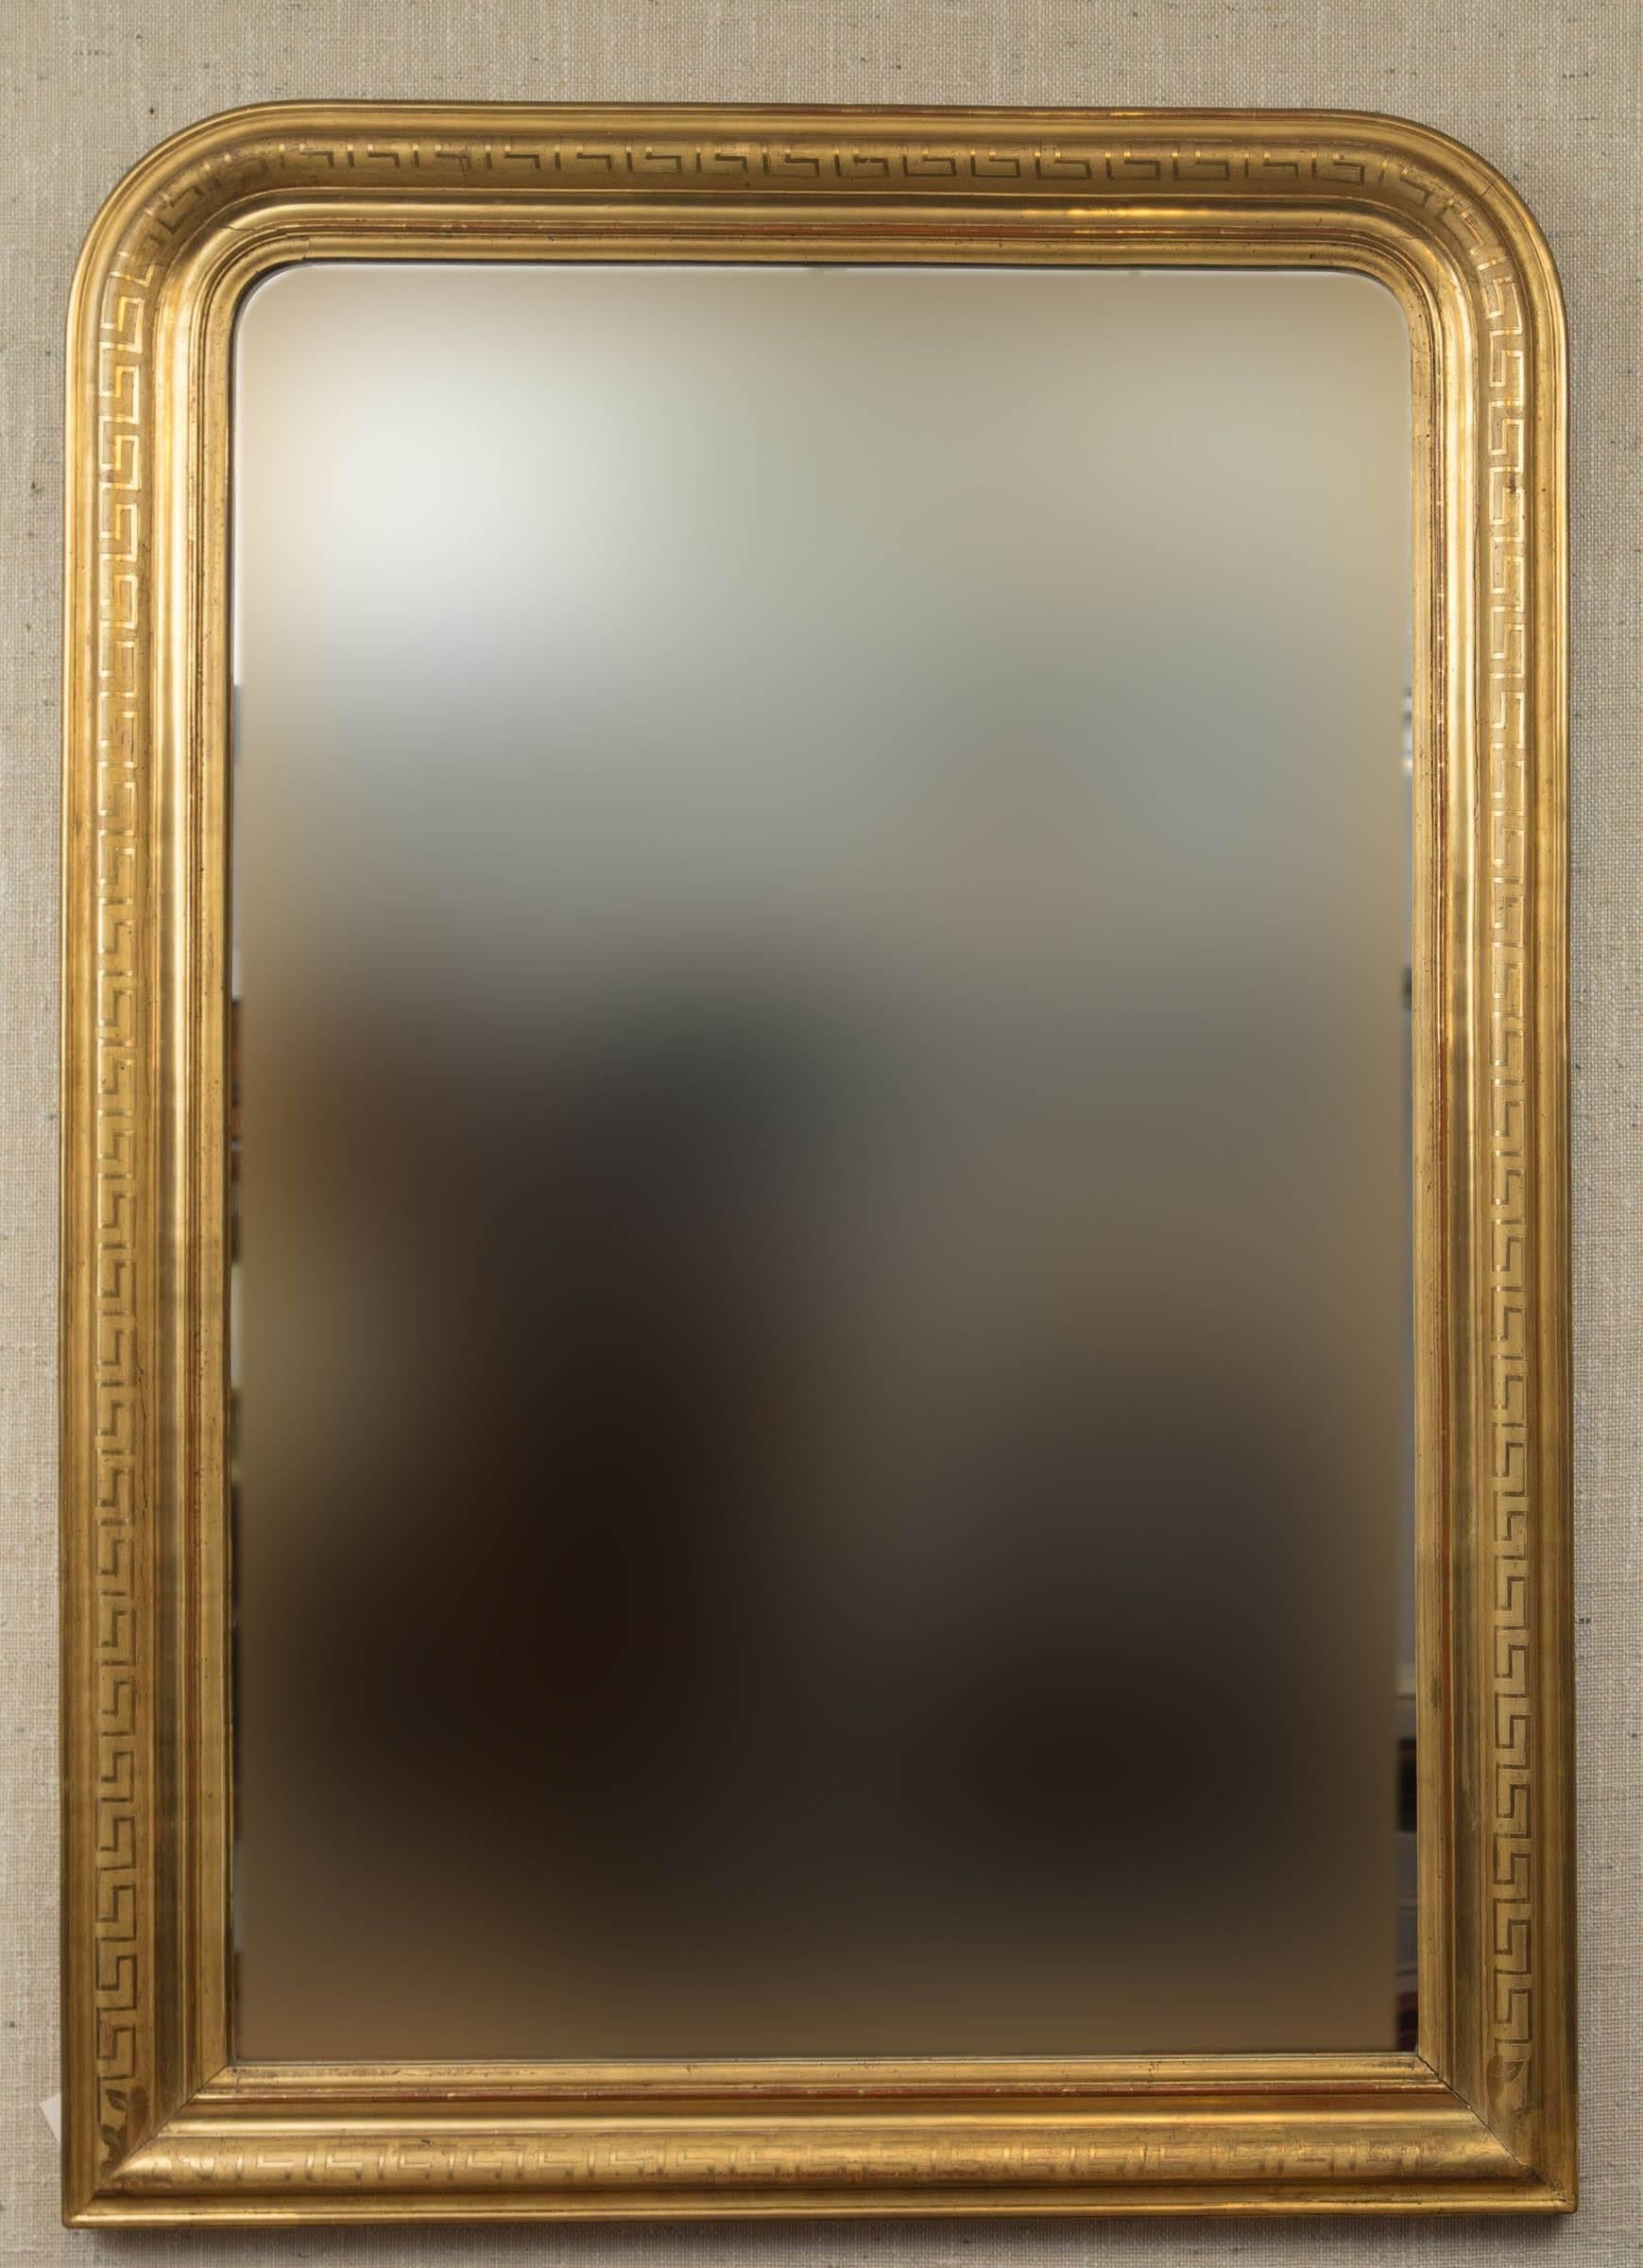 19th century giltwood mirror with Greek key motif encompassing entire frame. Original glass.